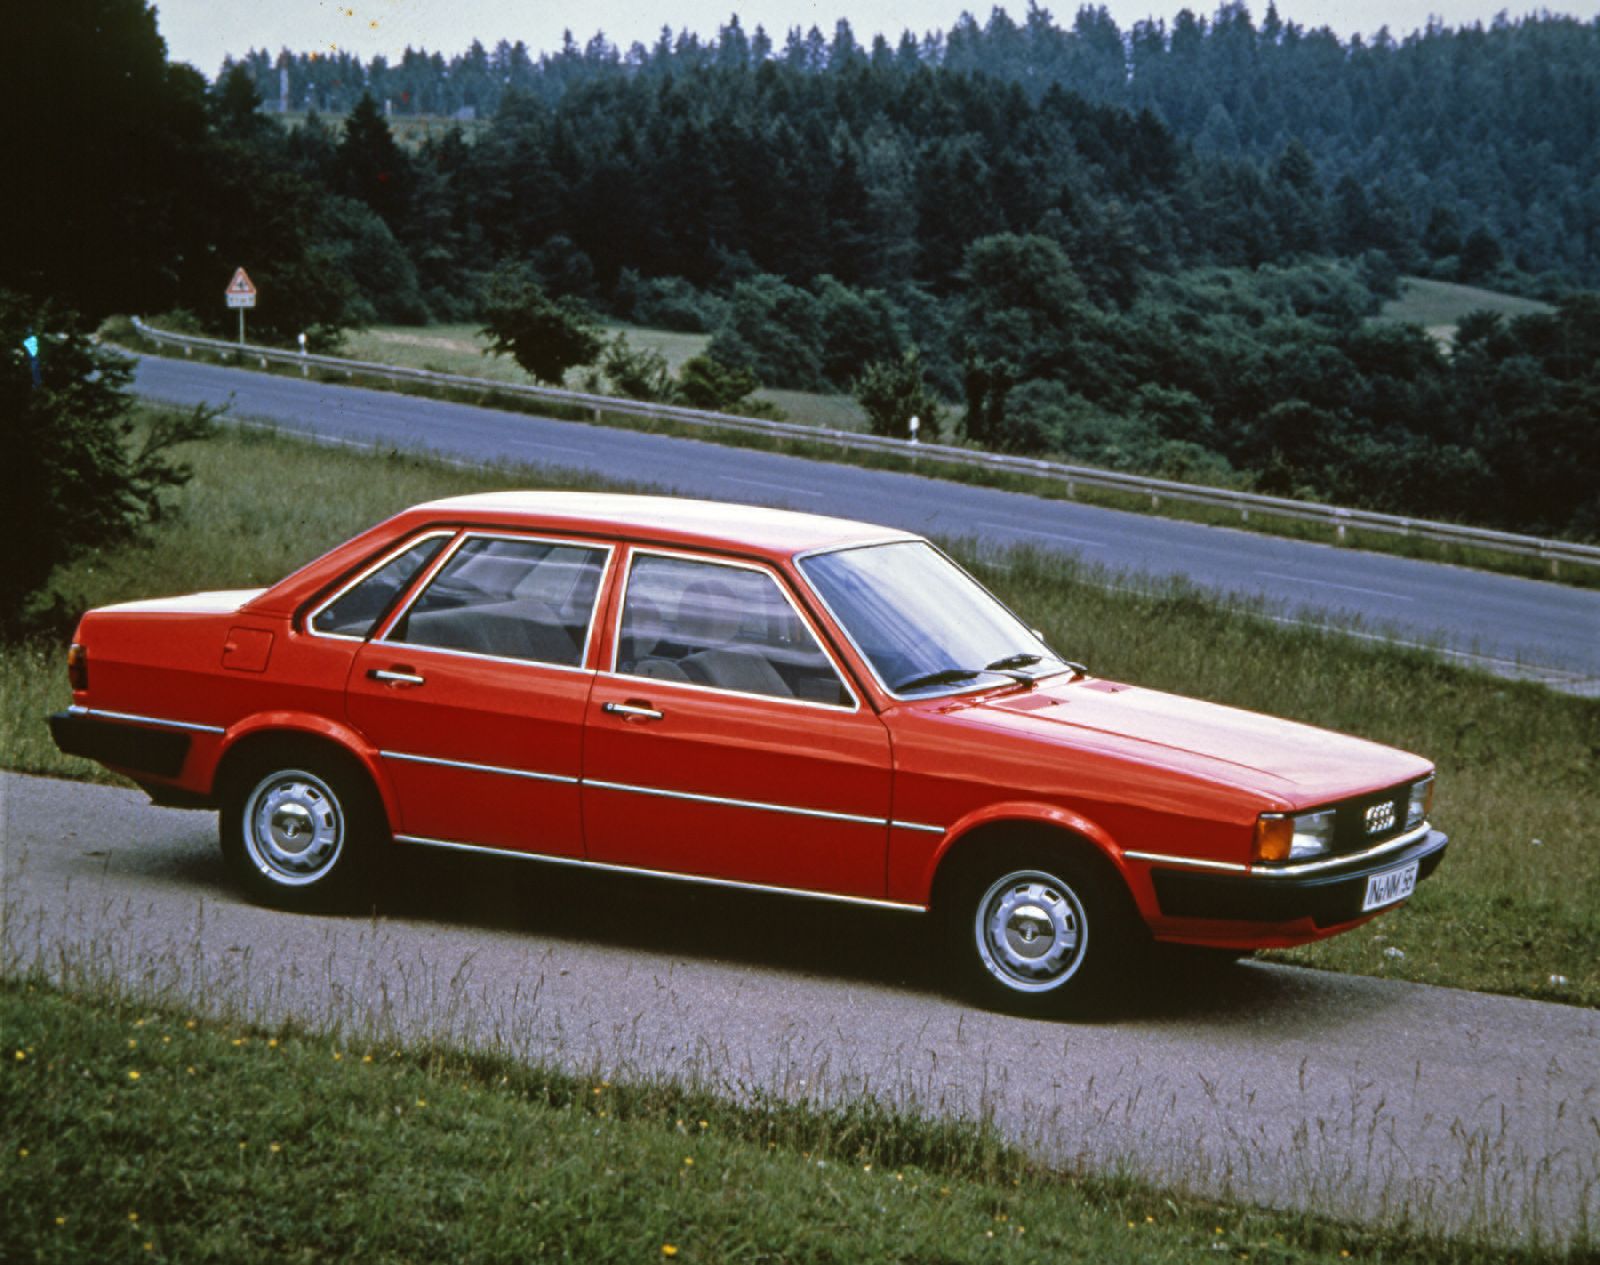 Ауди первого поколения. Audi 80 b2 седан. Audi 80 1978. Ауди 80 в2. Ауди 80 b2.